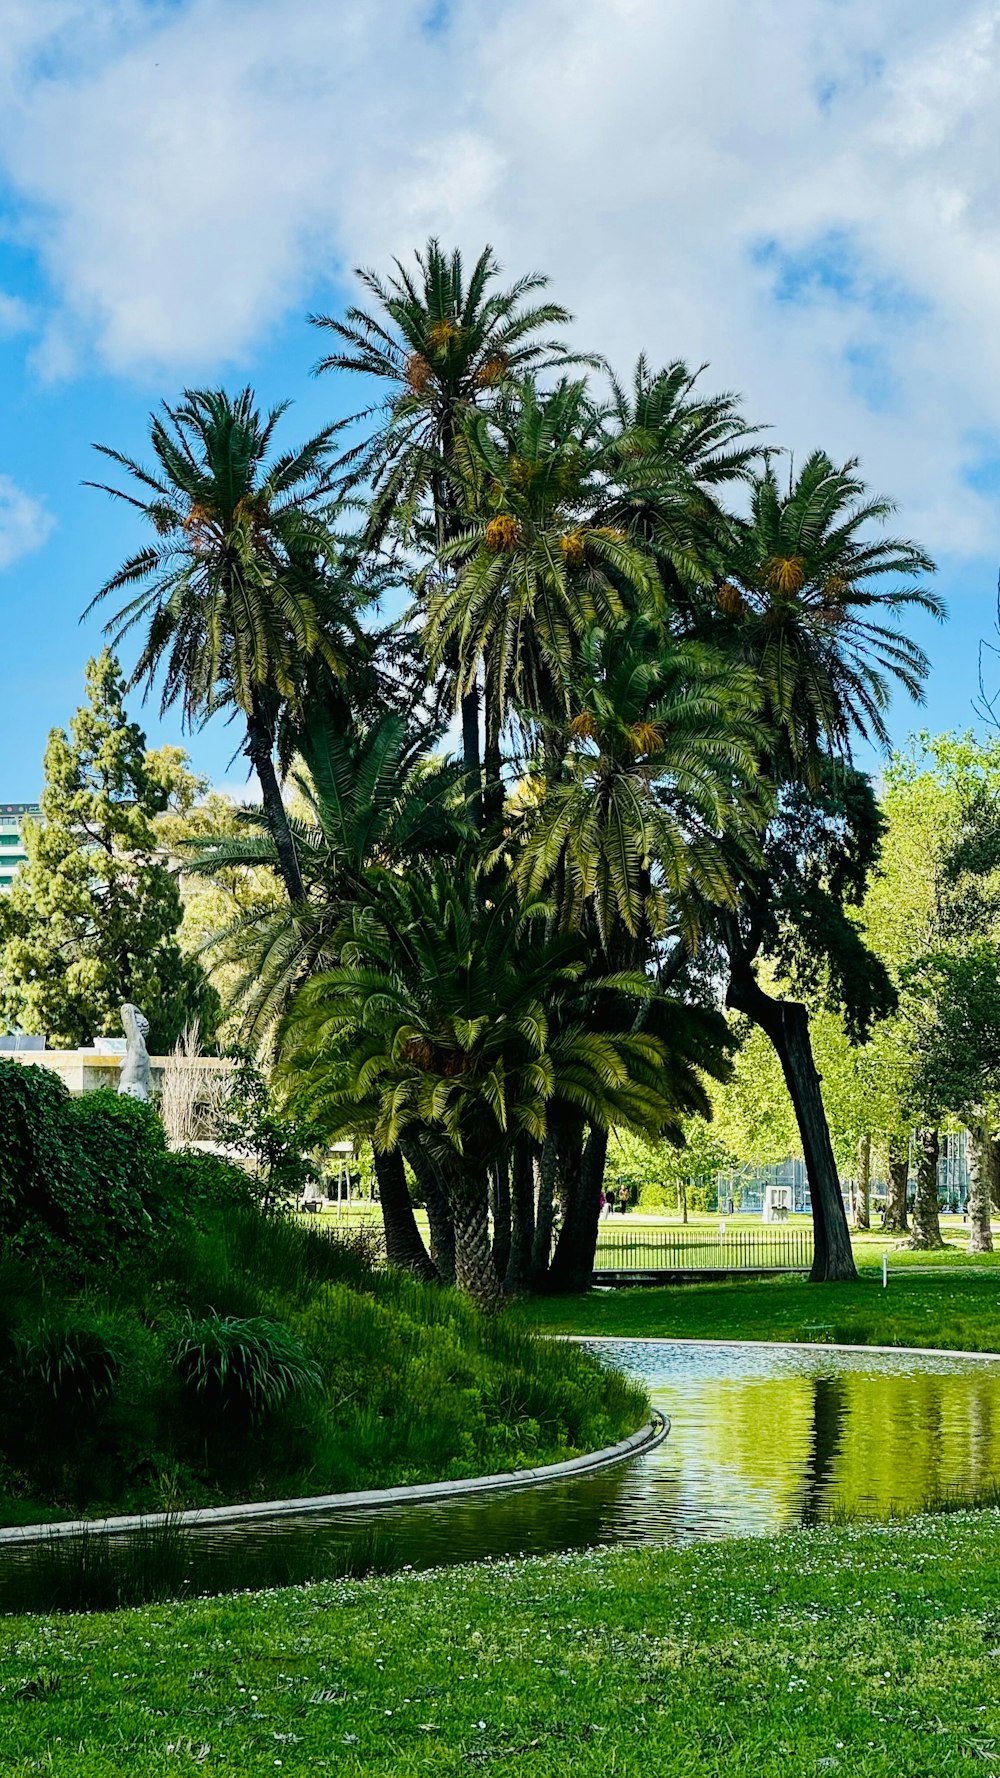 a palm tree next to a pond in a park